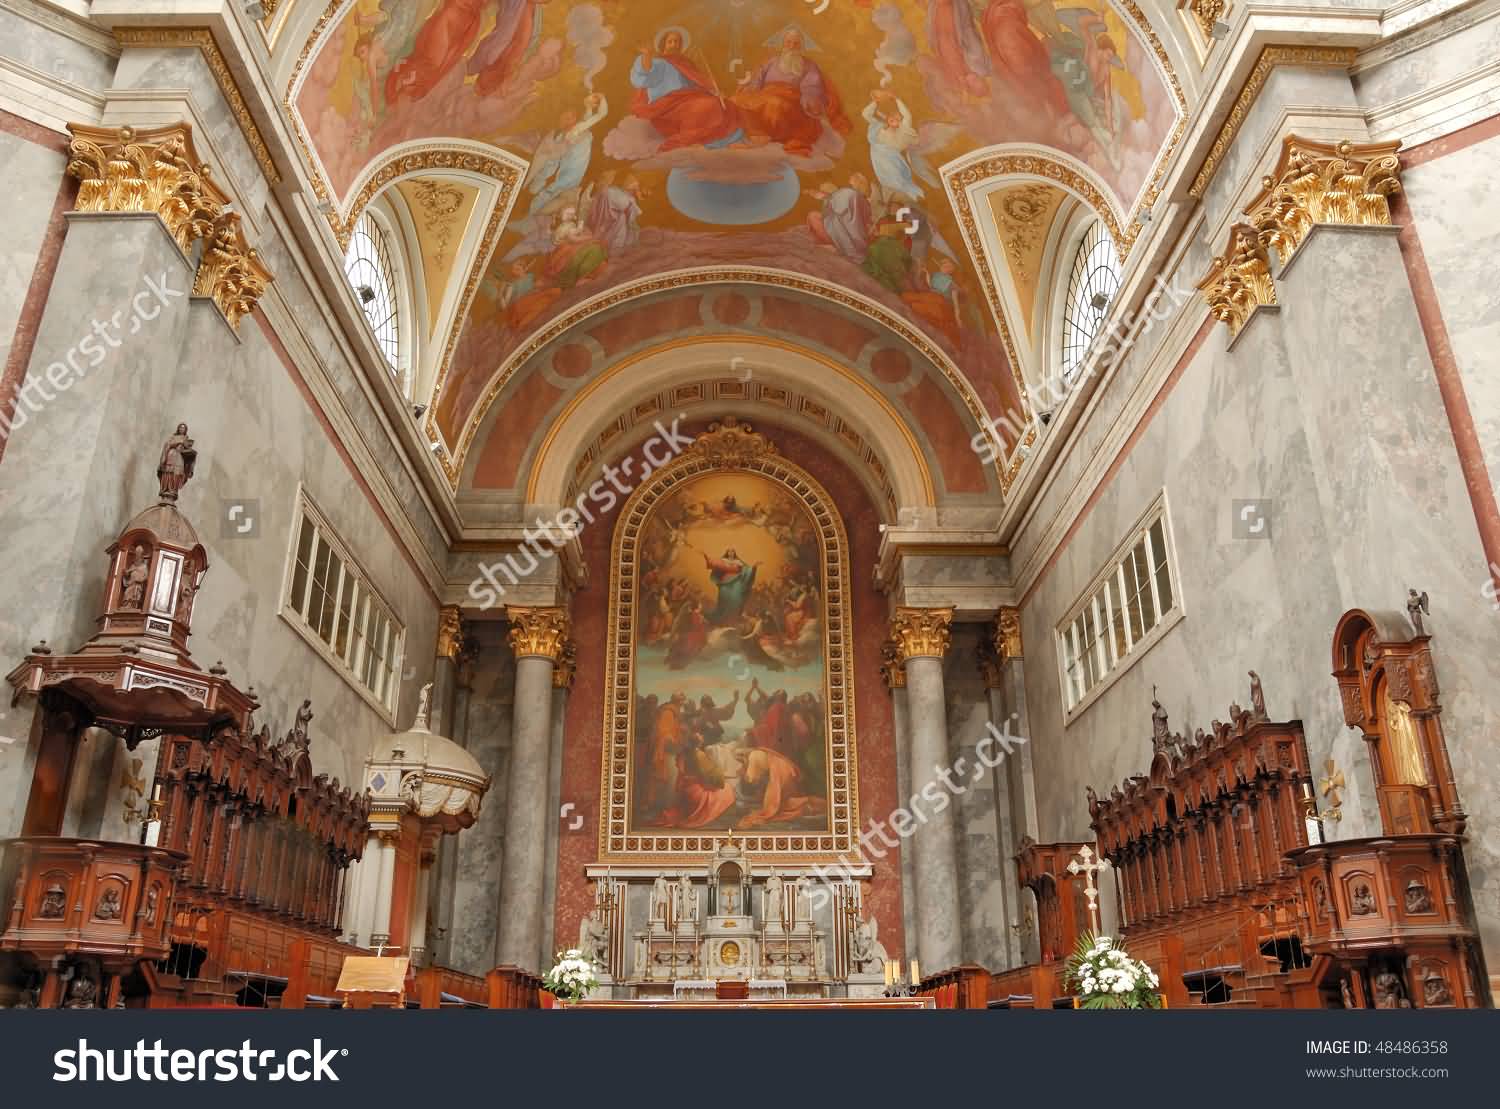 Interior And Altar Of The Esztergom Basilica In Hungary